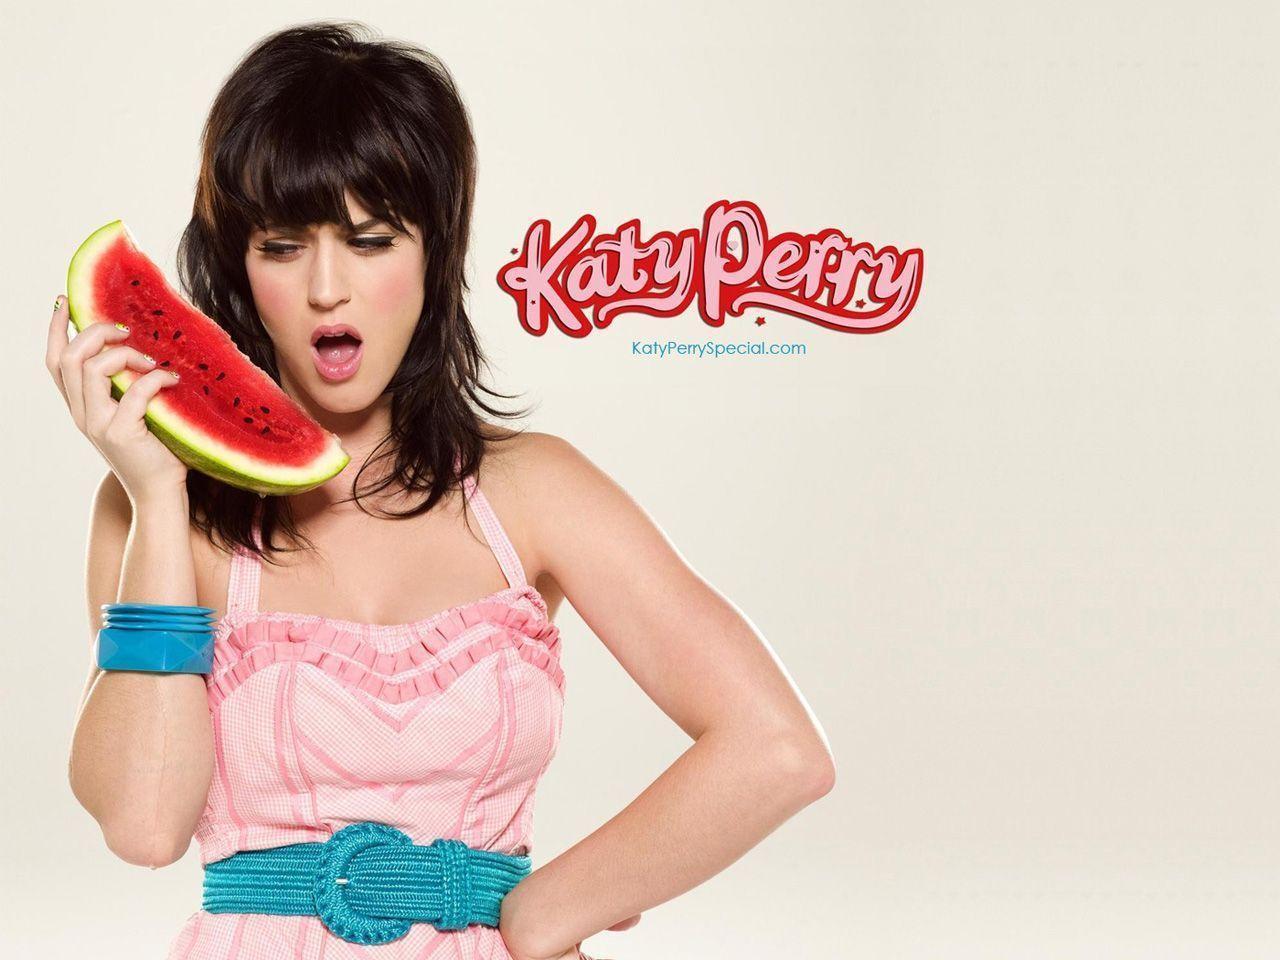 Katy Perry Wallpaper, Ringtones, and Avatars Downloads Katy